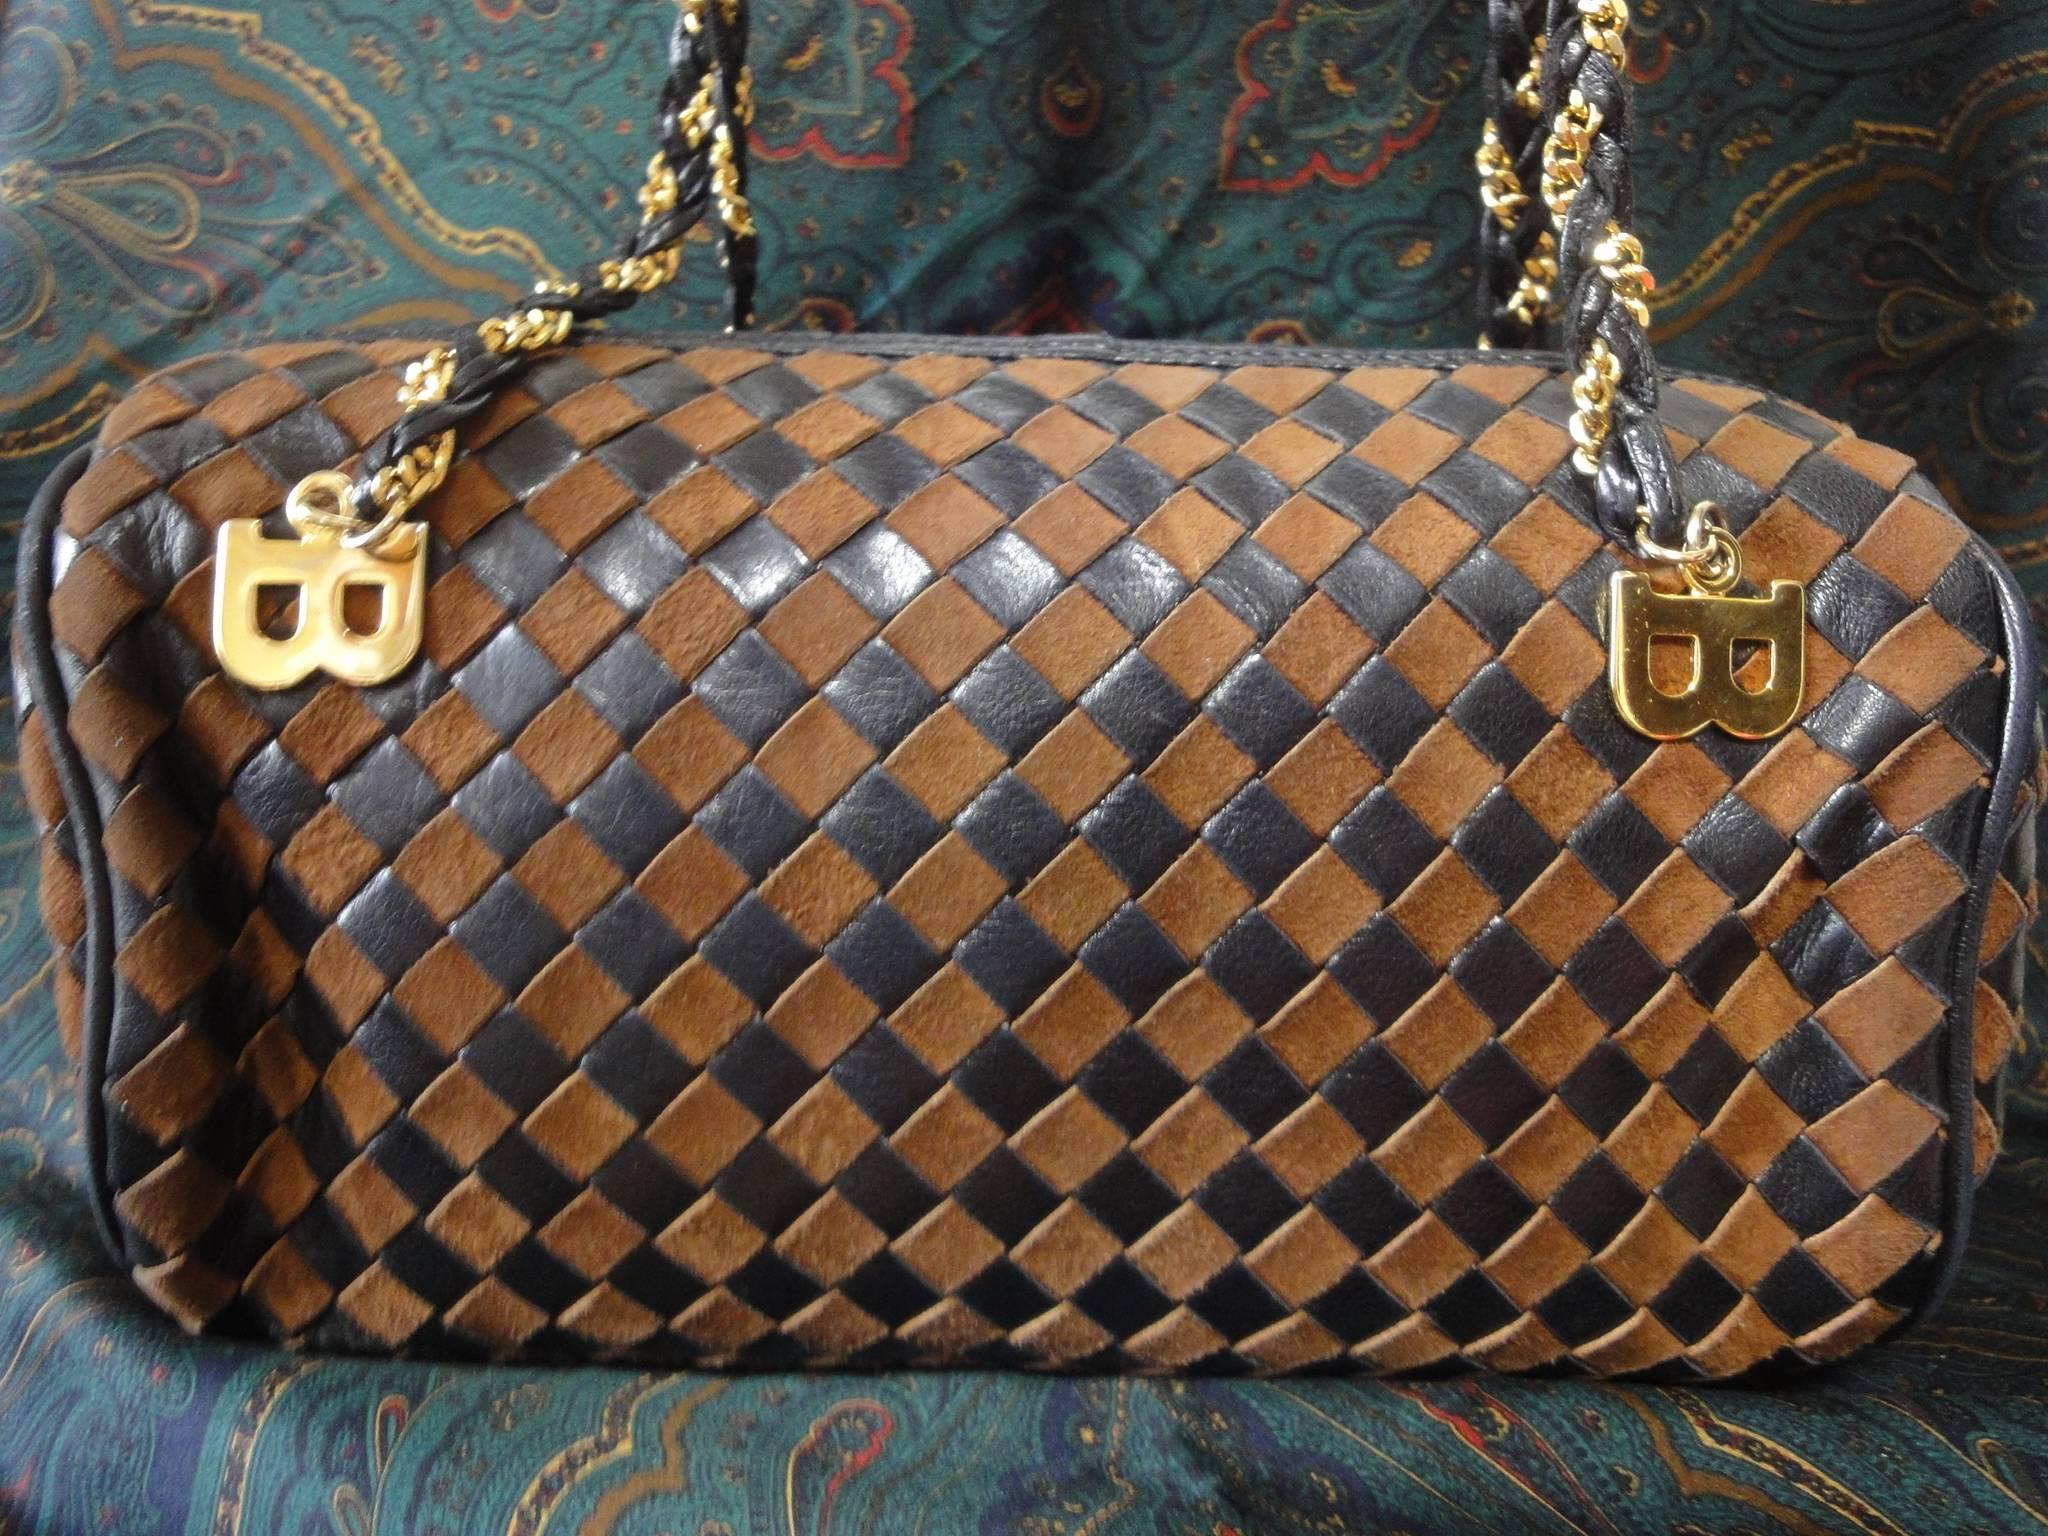 bally purse vintage